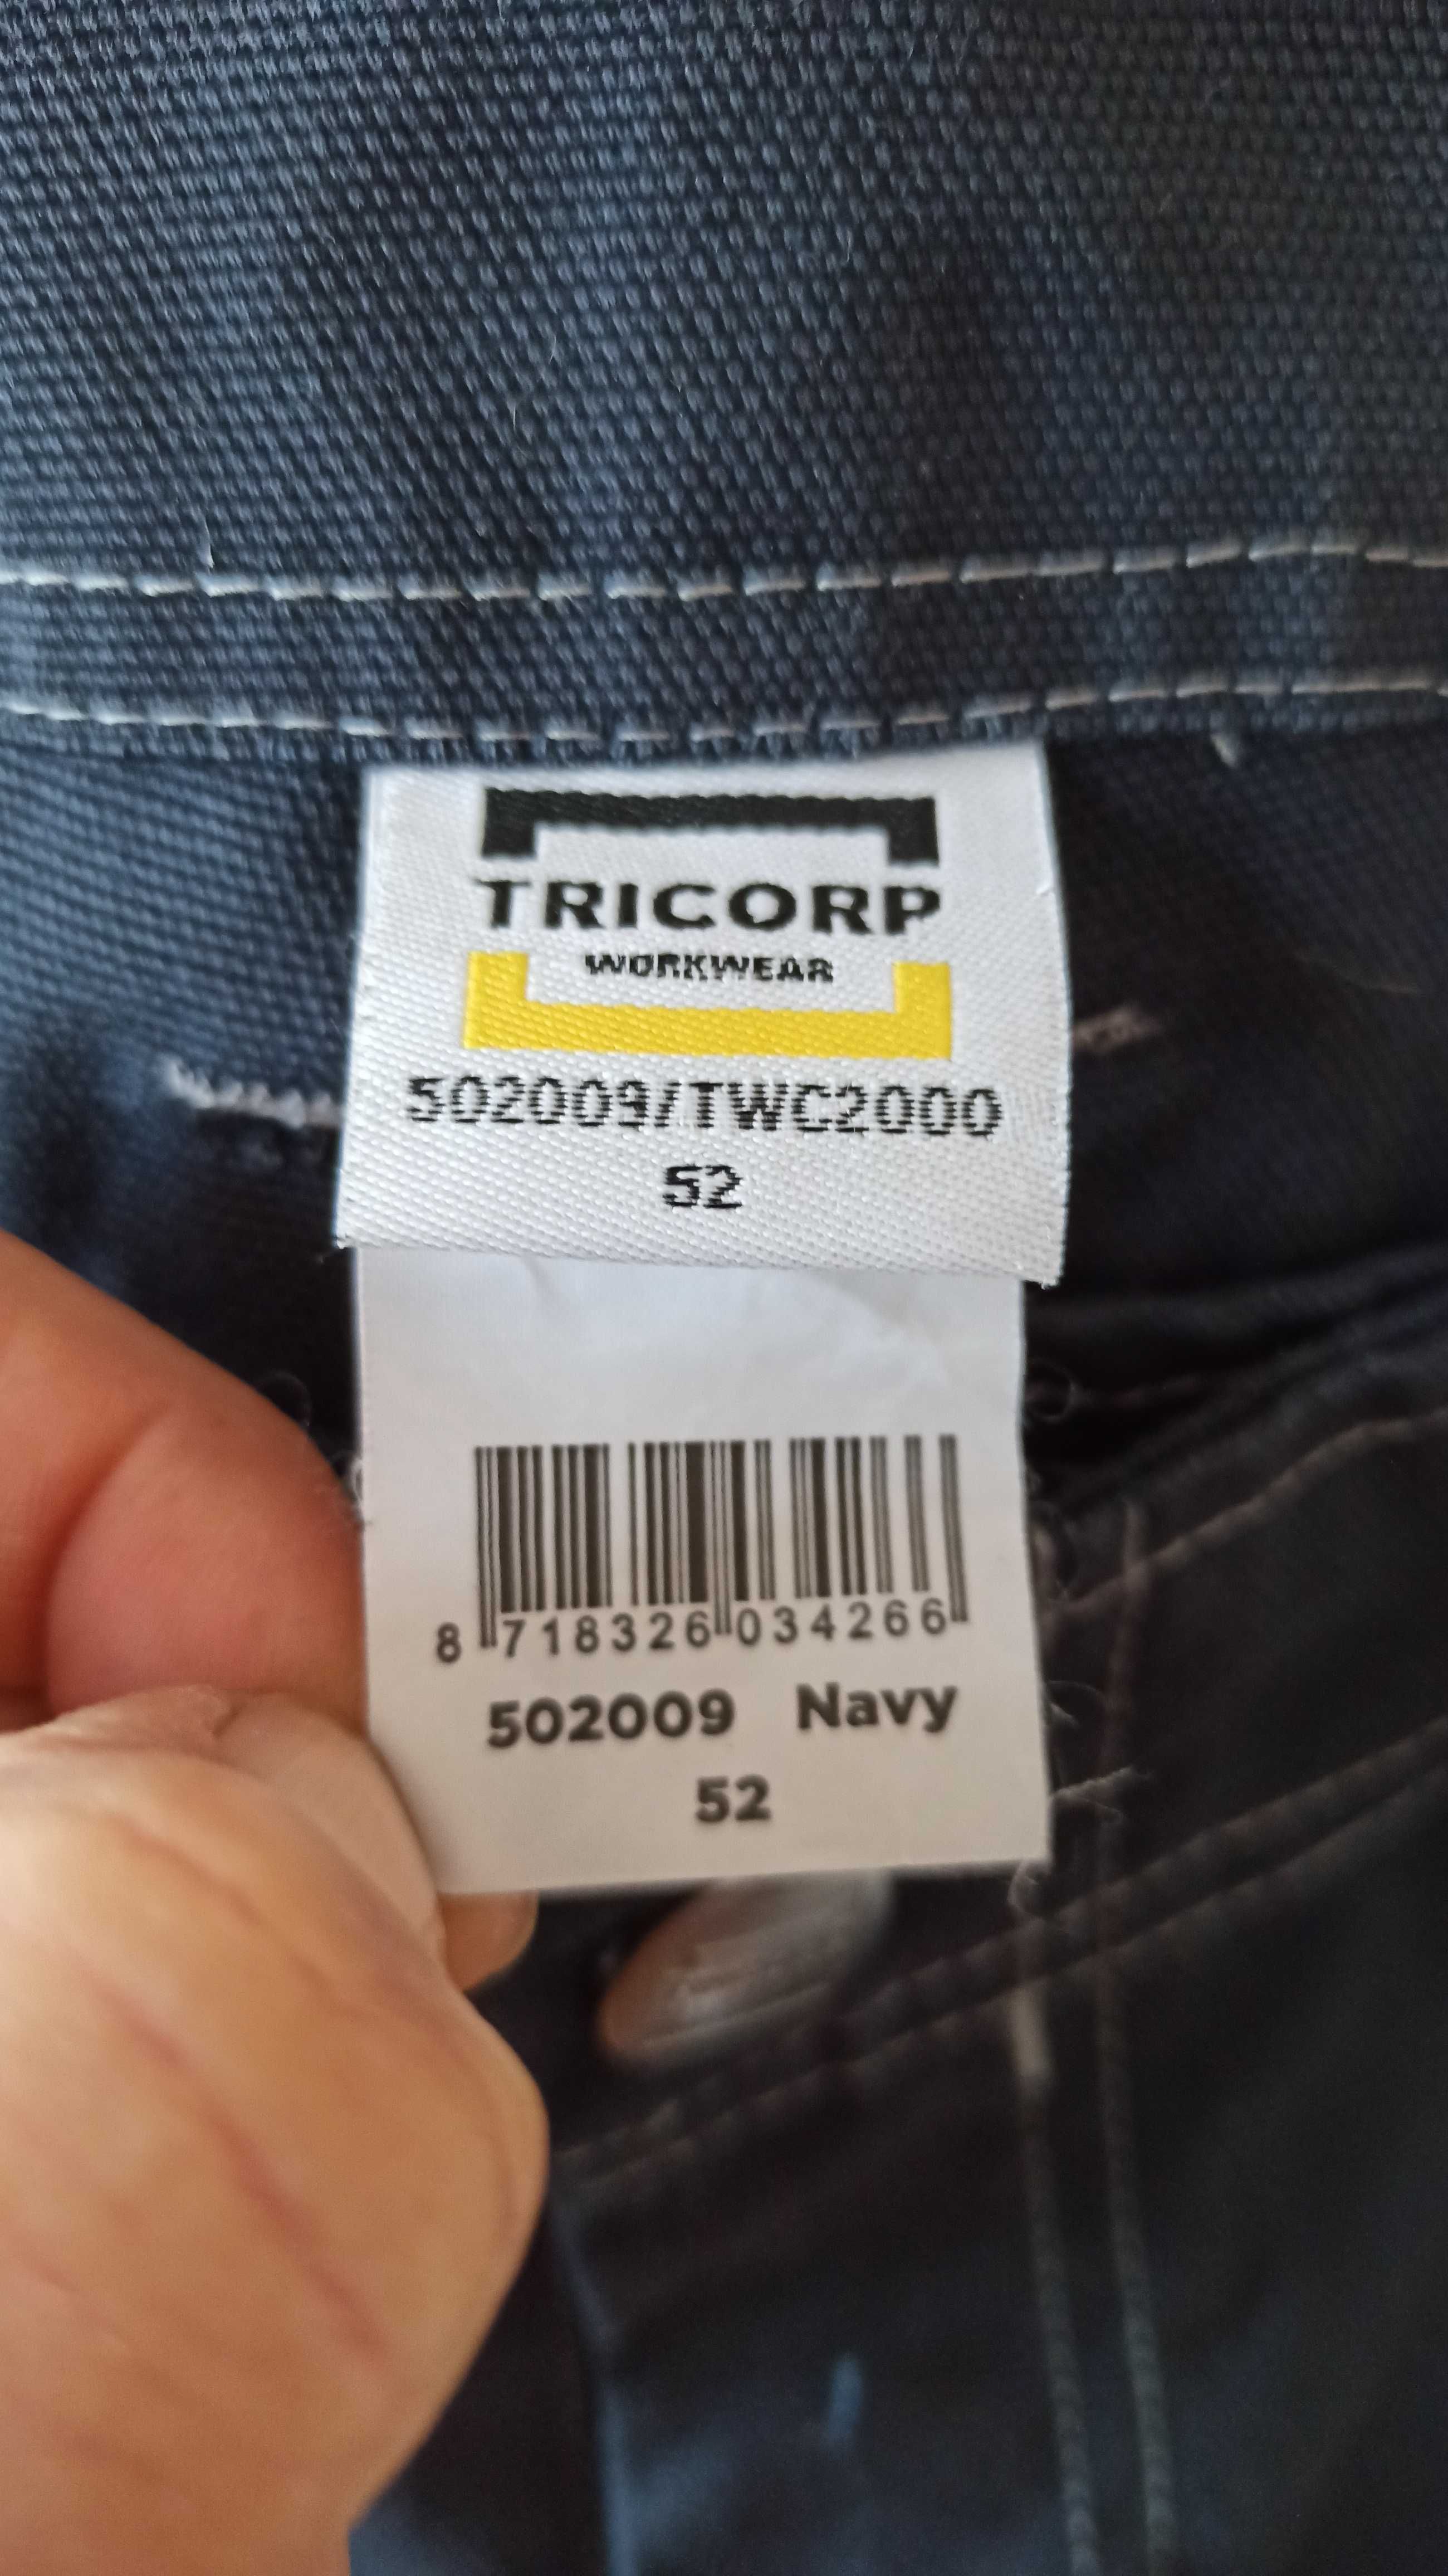 Рабочая одежда, штаны спецовочные (52)  Tricorp TWC2000 502009